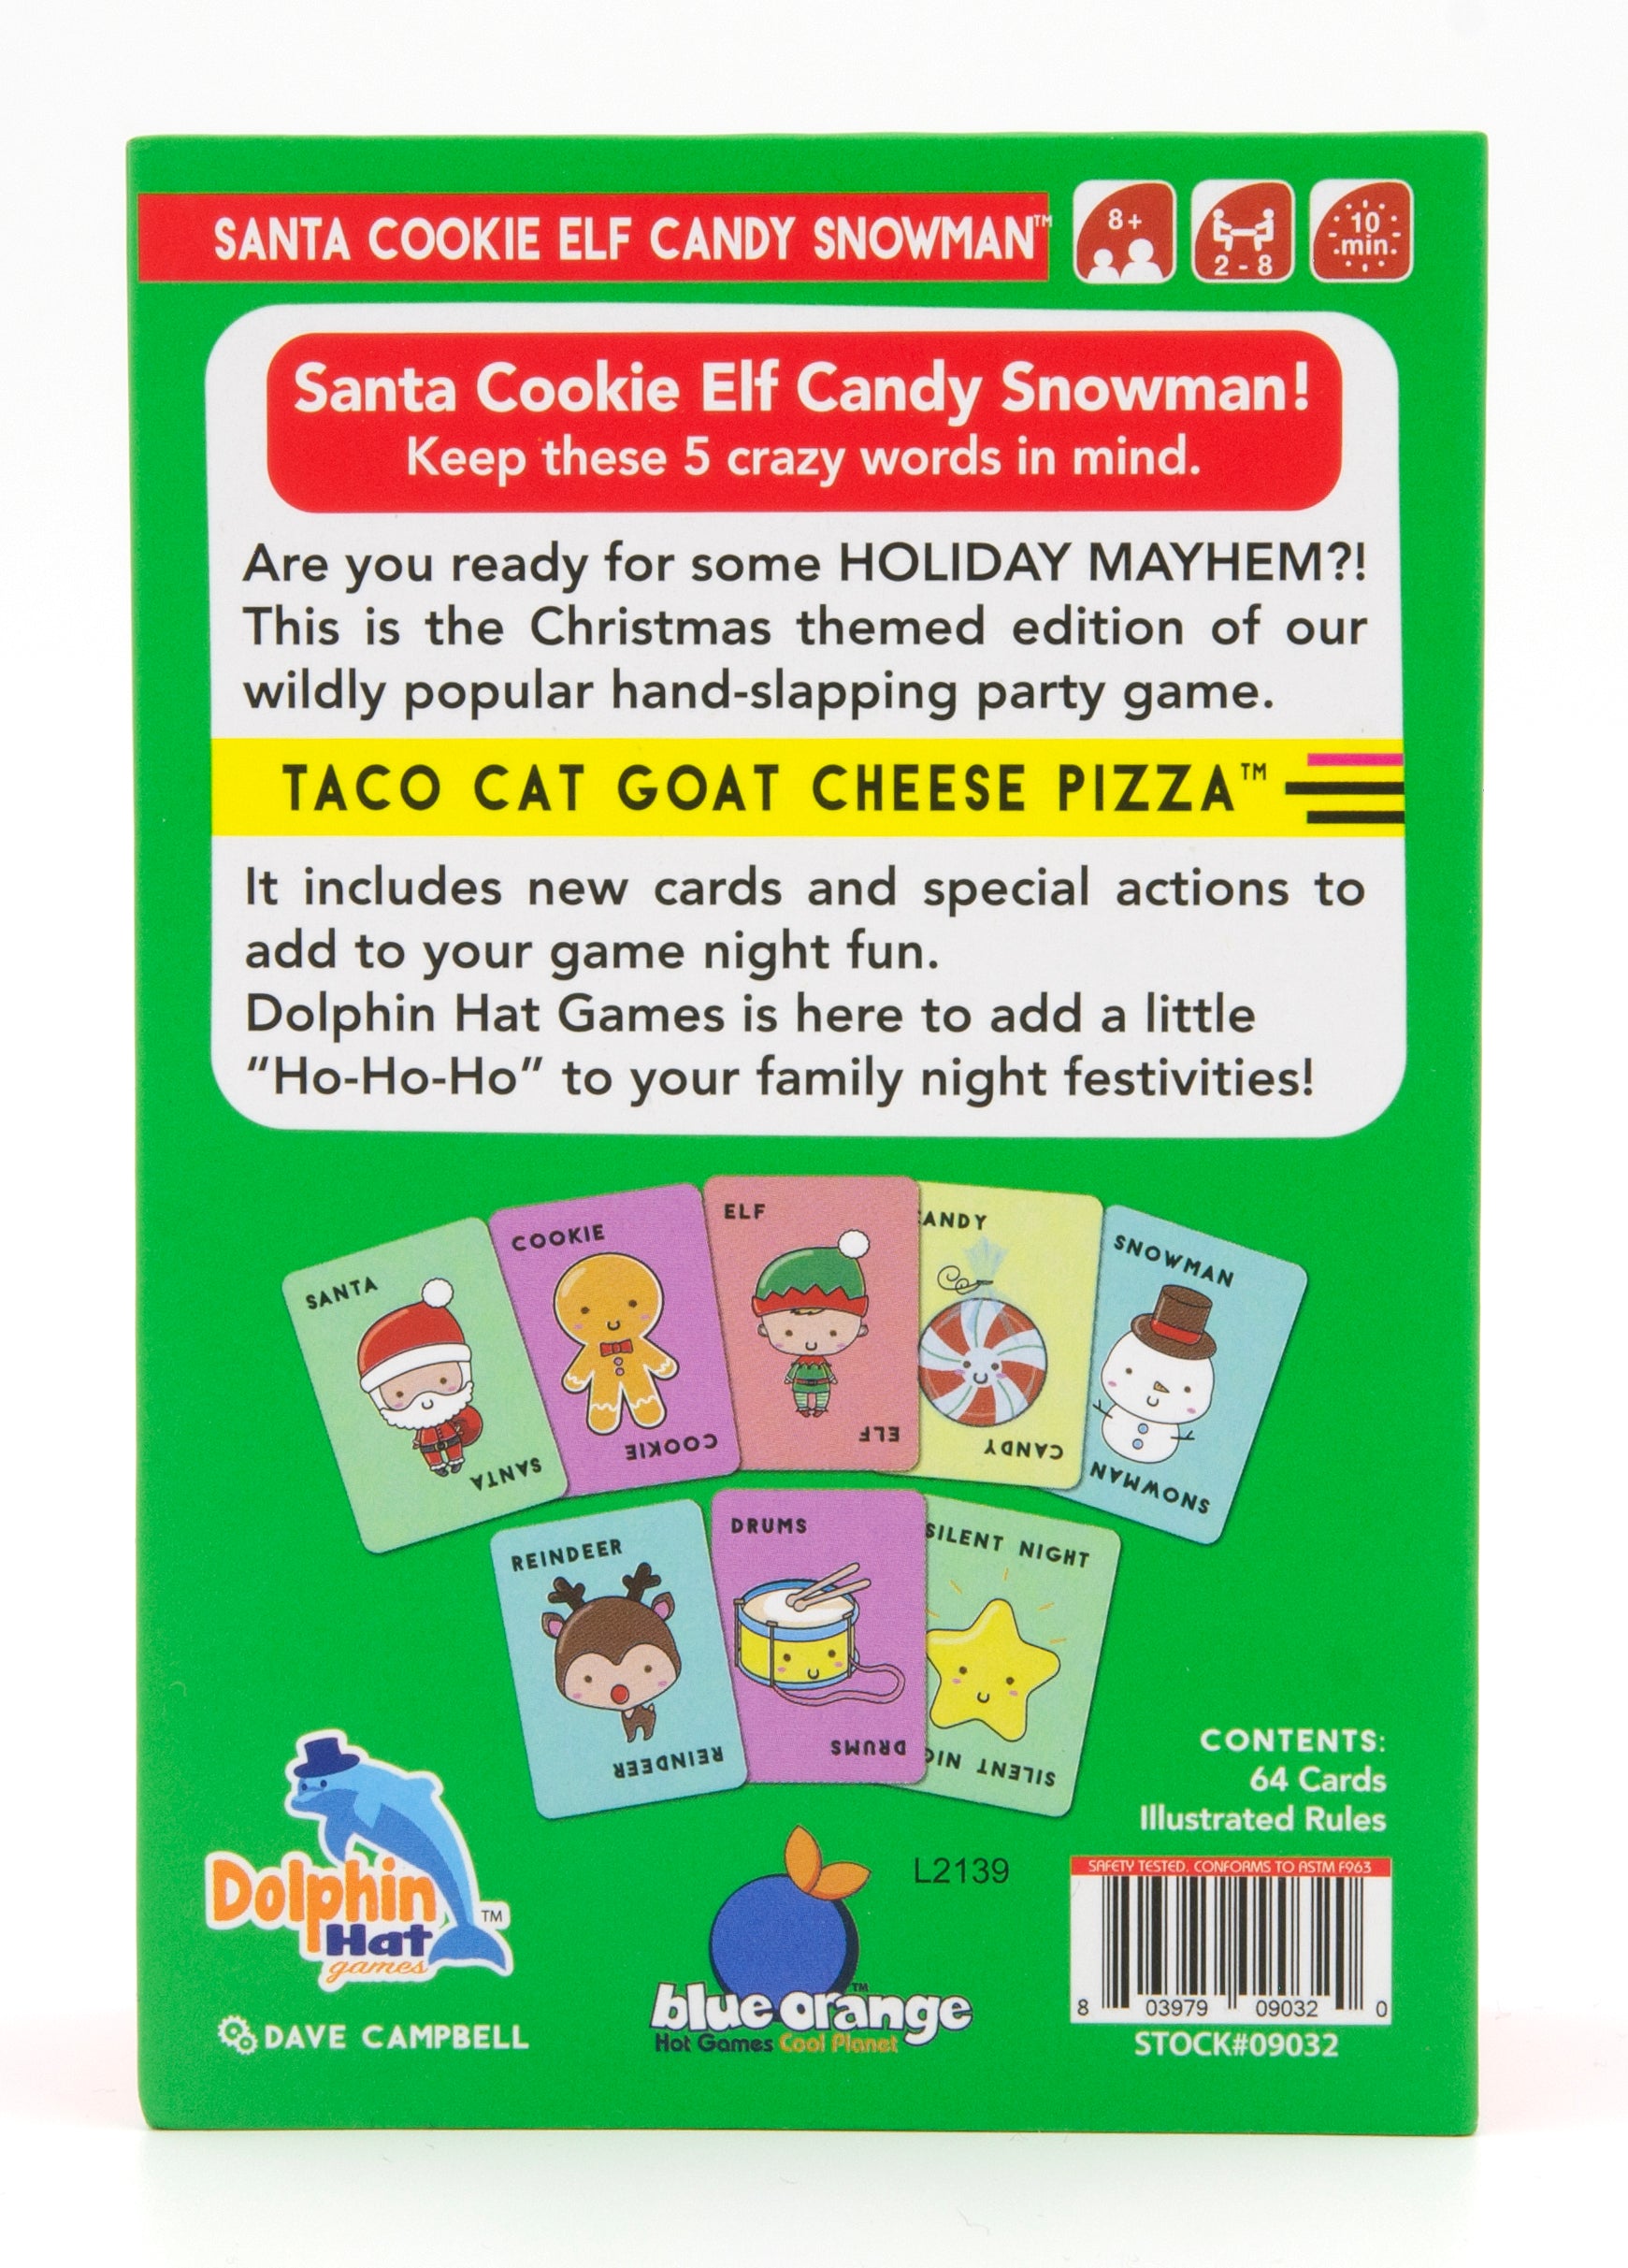 Santa Cookie Elf Candy Snowman - Taco Cat Goat Cheese